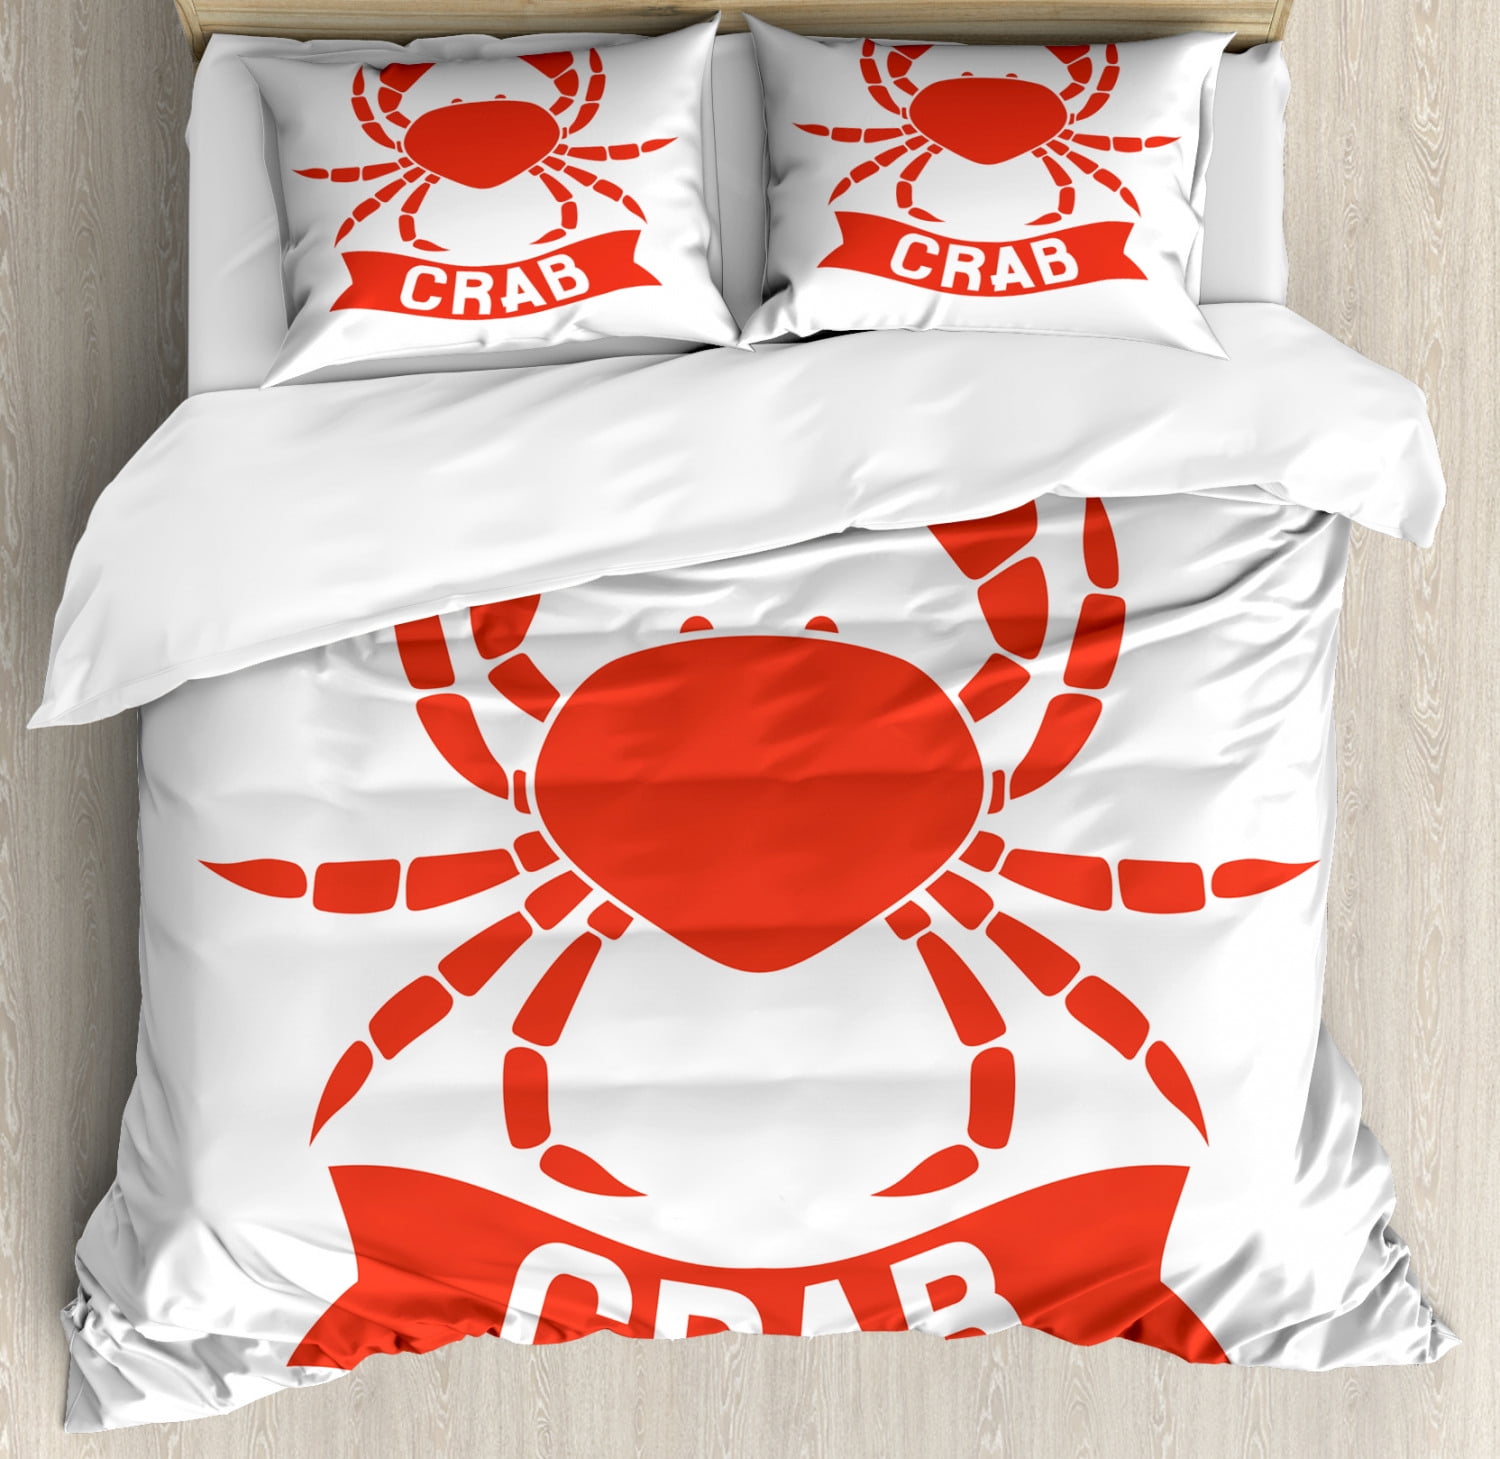 Crabs King Size Duvet Cover Set Exotic Aquatic Animal Symbol In